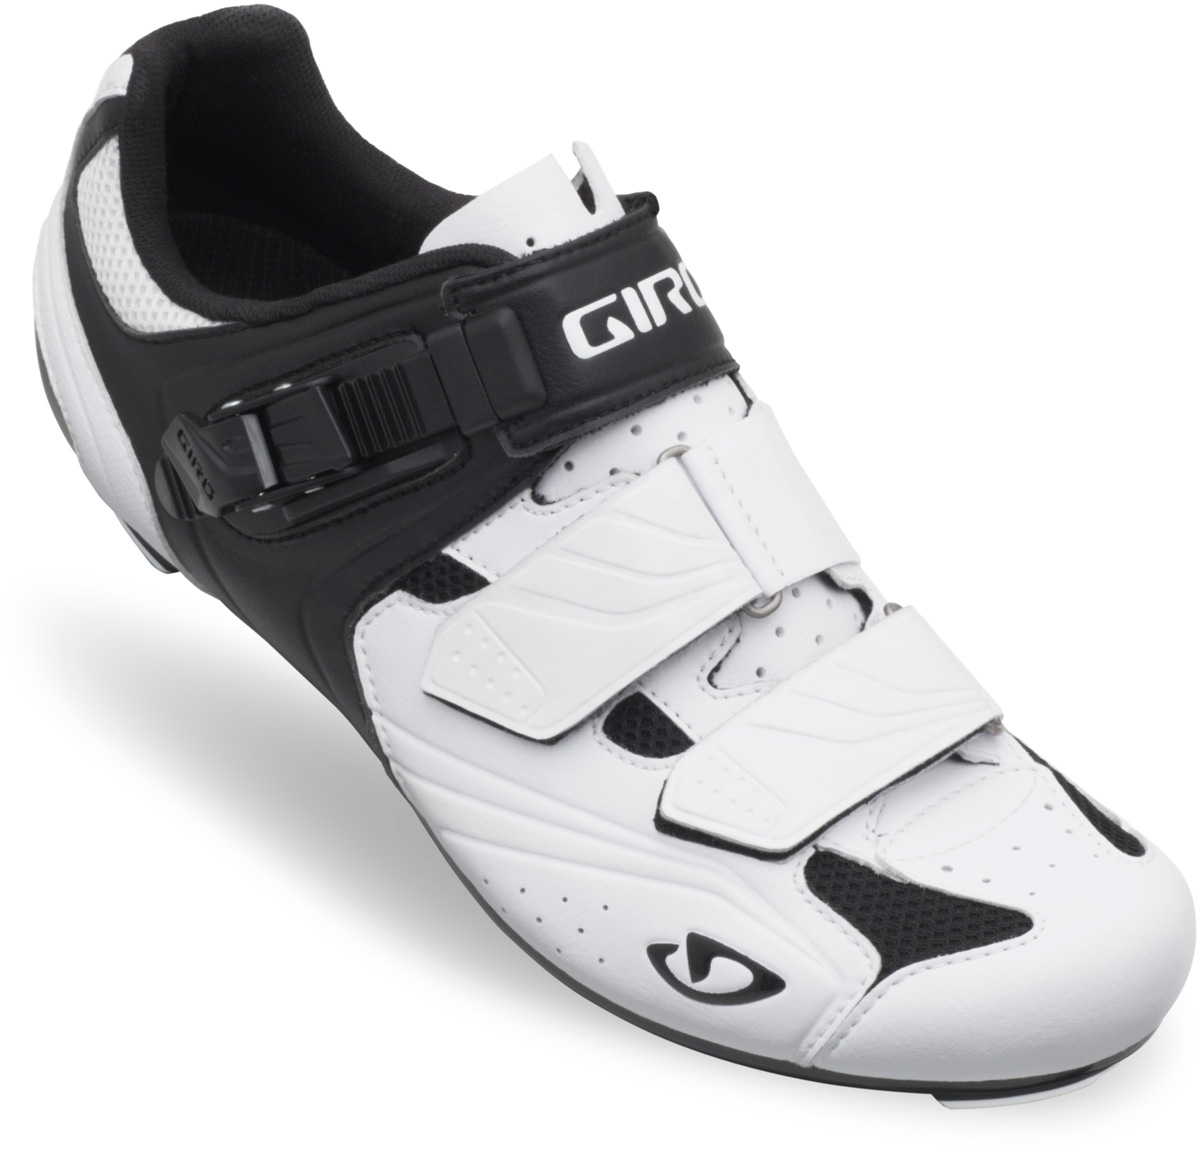 giro road bike shoes